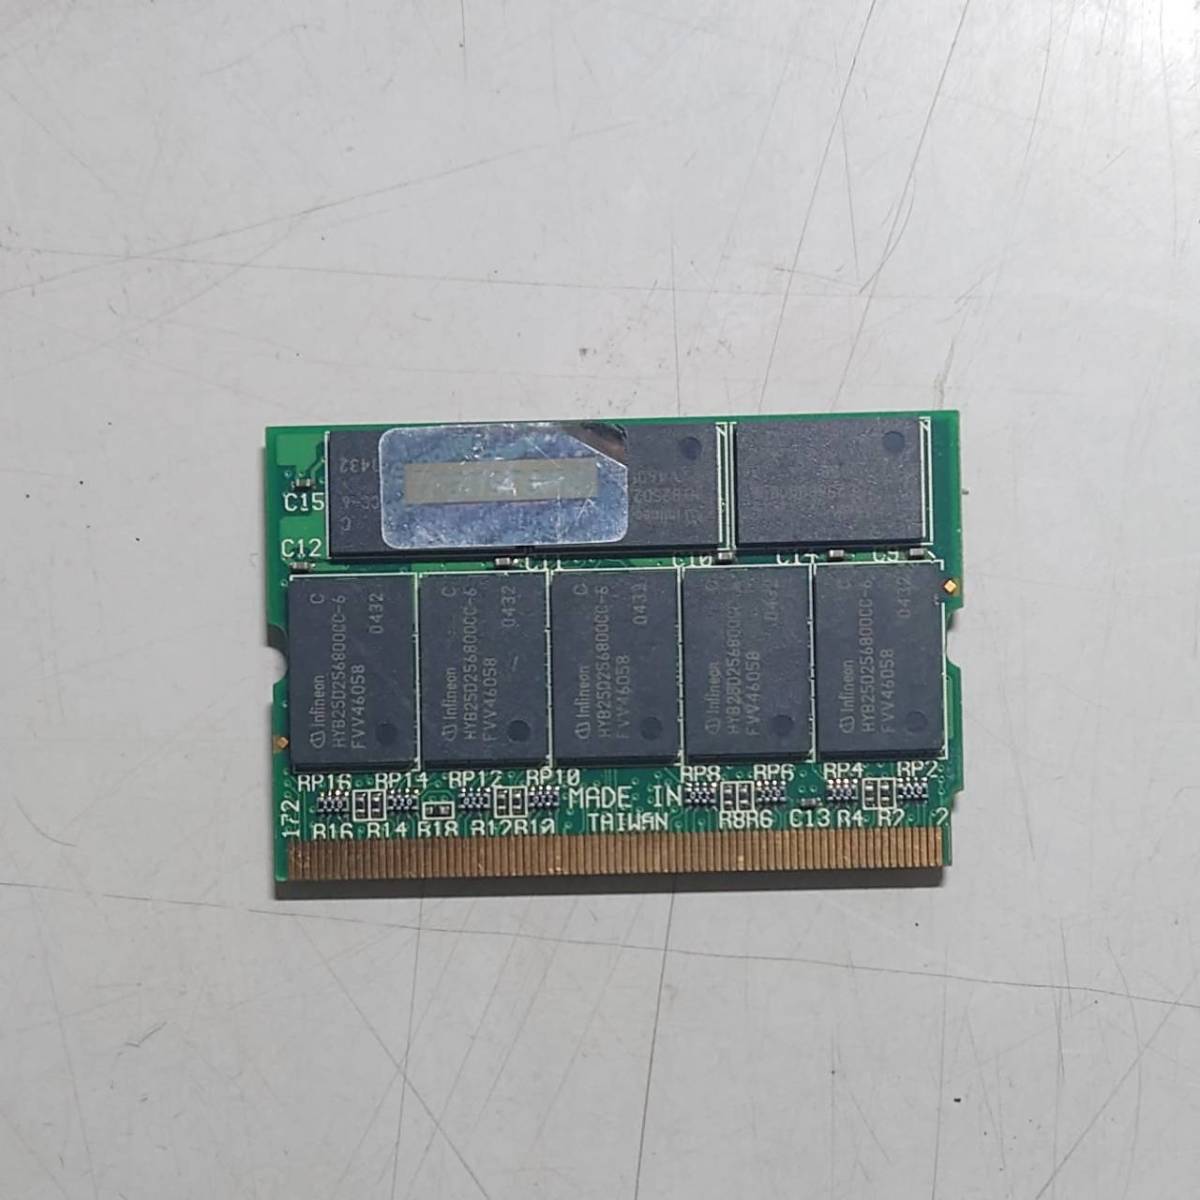 KN3664 [ present condition goods ]DDR333 DDR SDRAM 512M